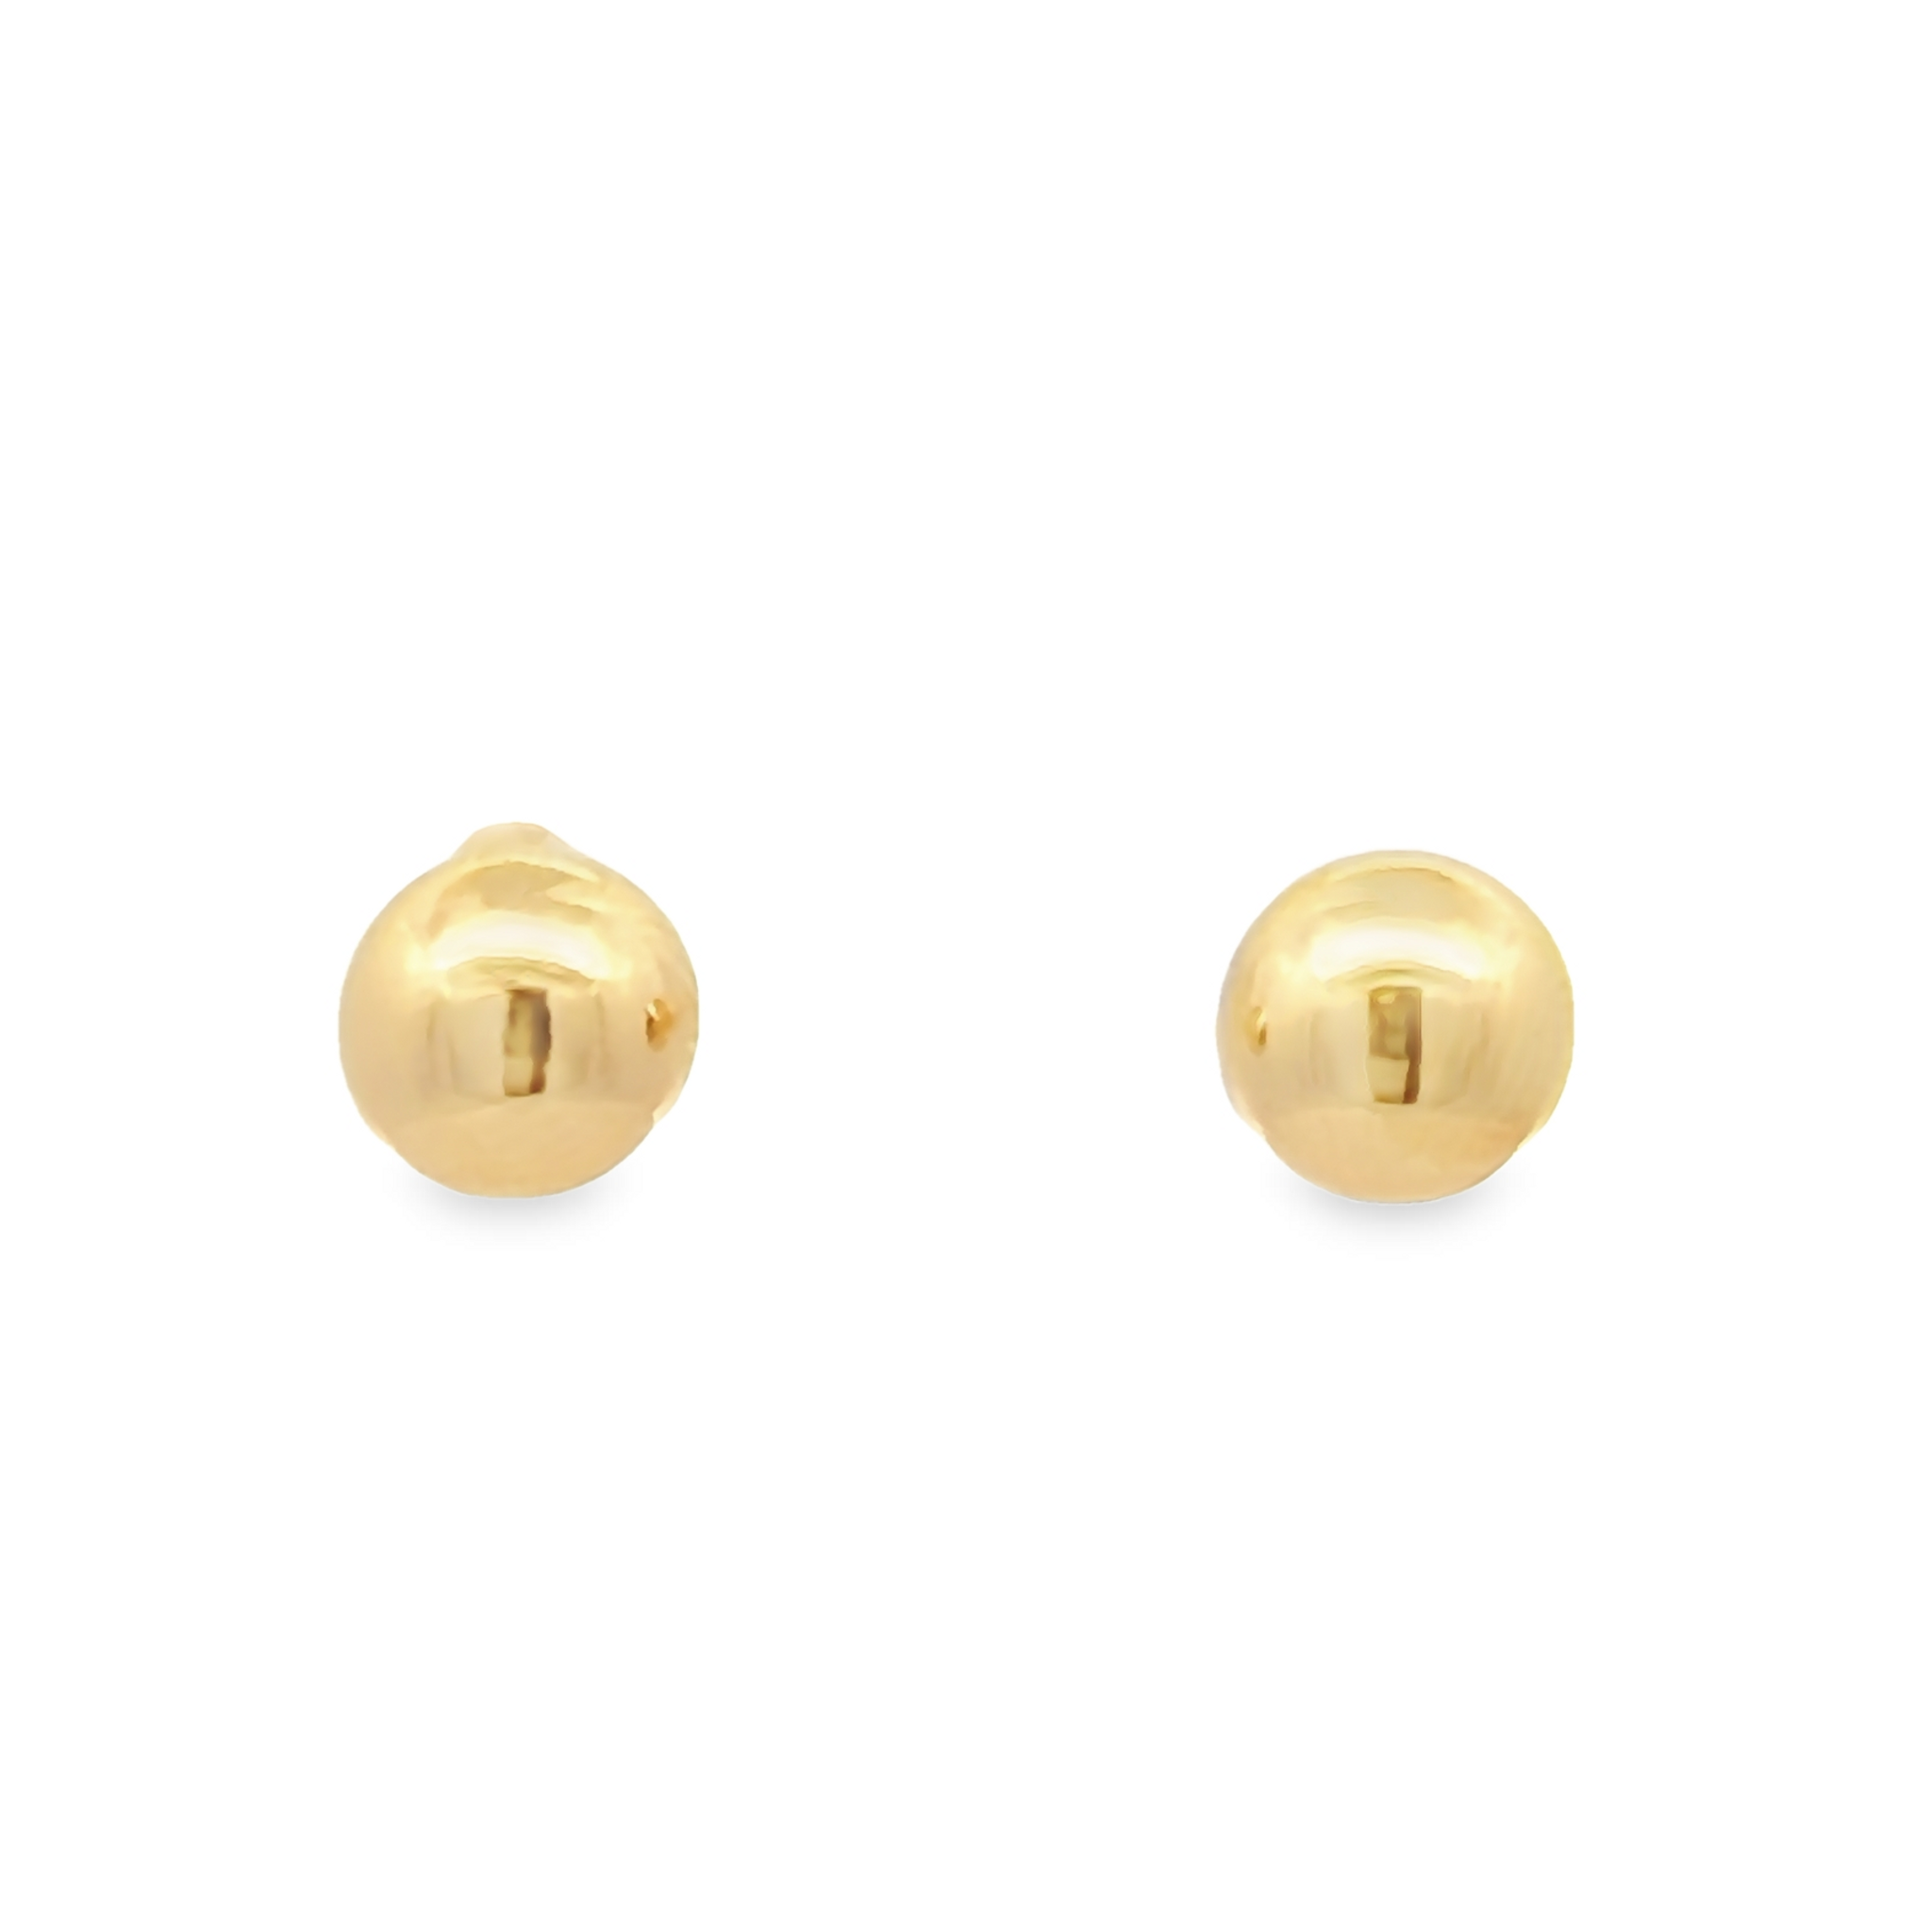 7mm 14k Yellow Gold Ball Stud Earrings